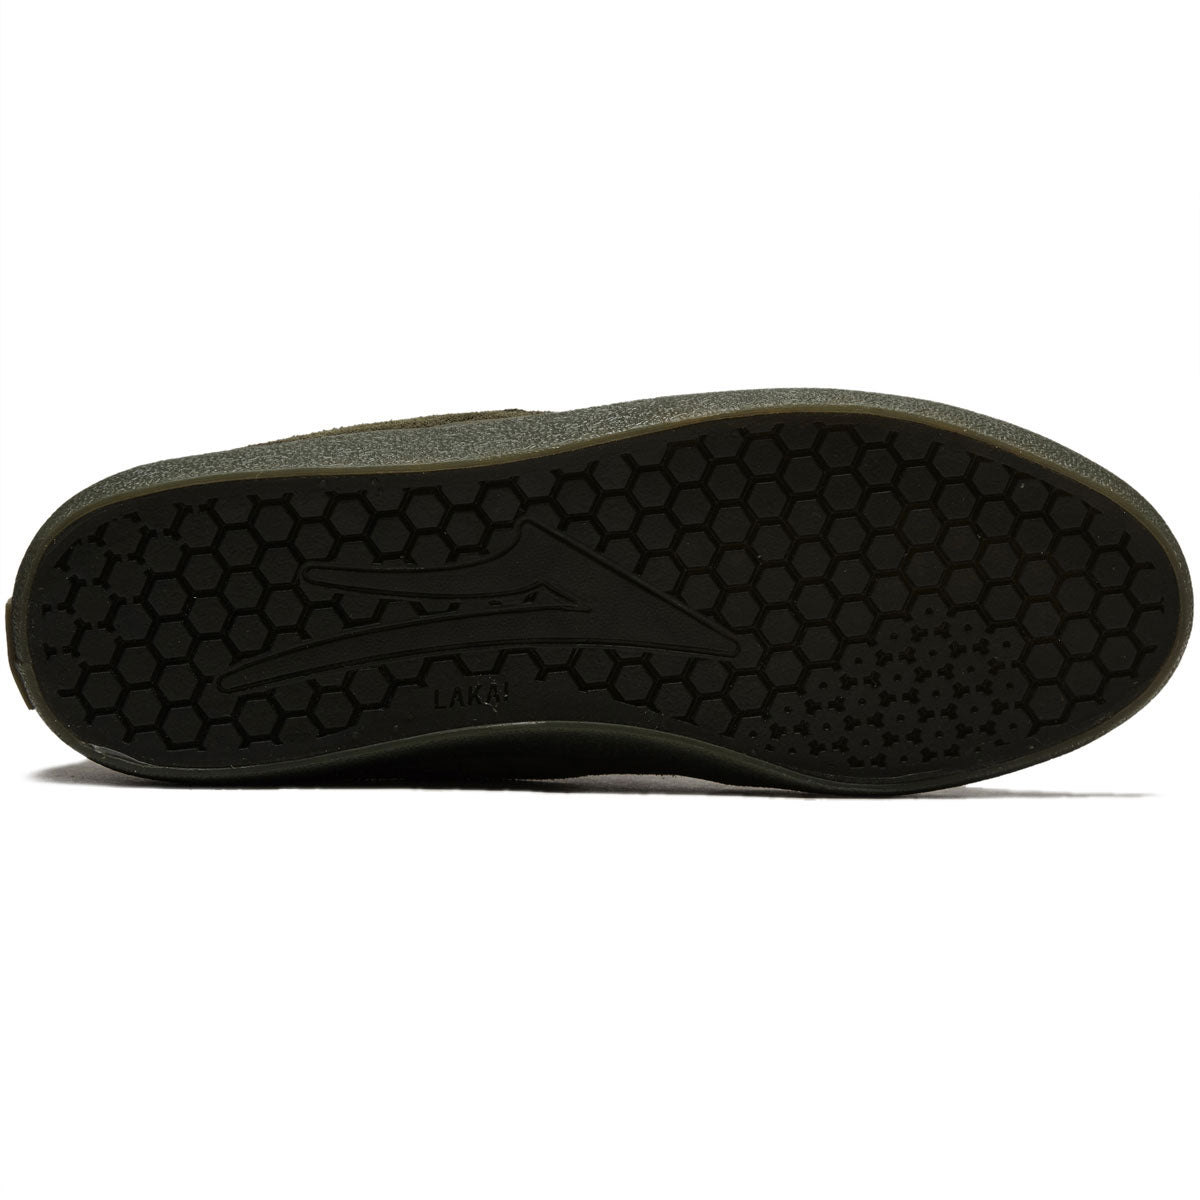 Essex - Light Grey/Charcoal Suede – Lakai Limited Footwear